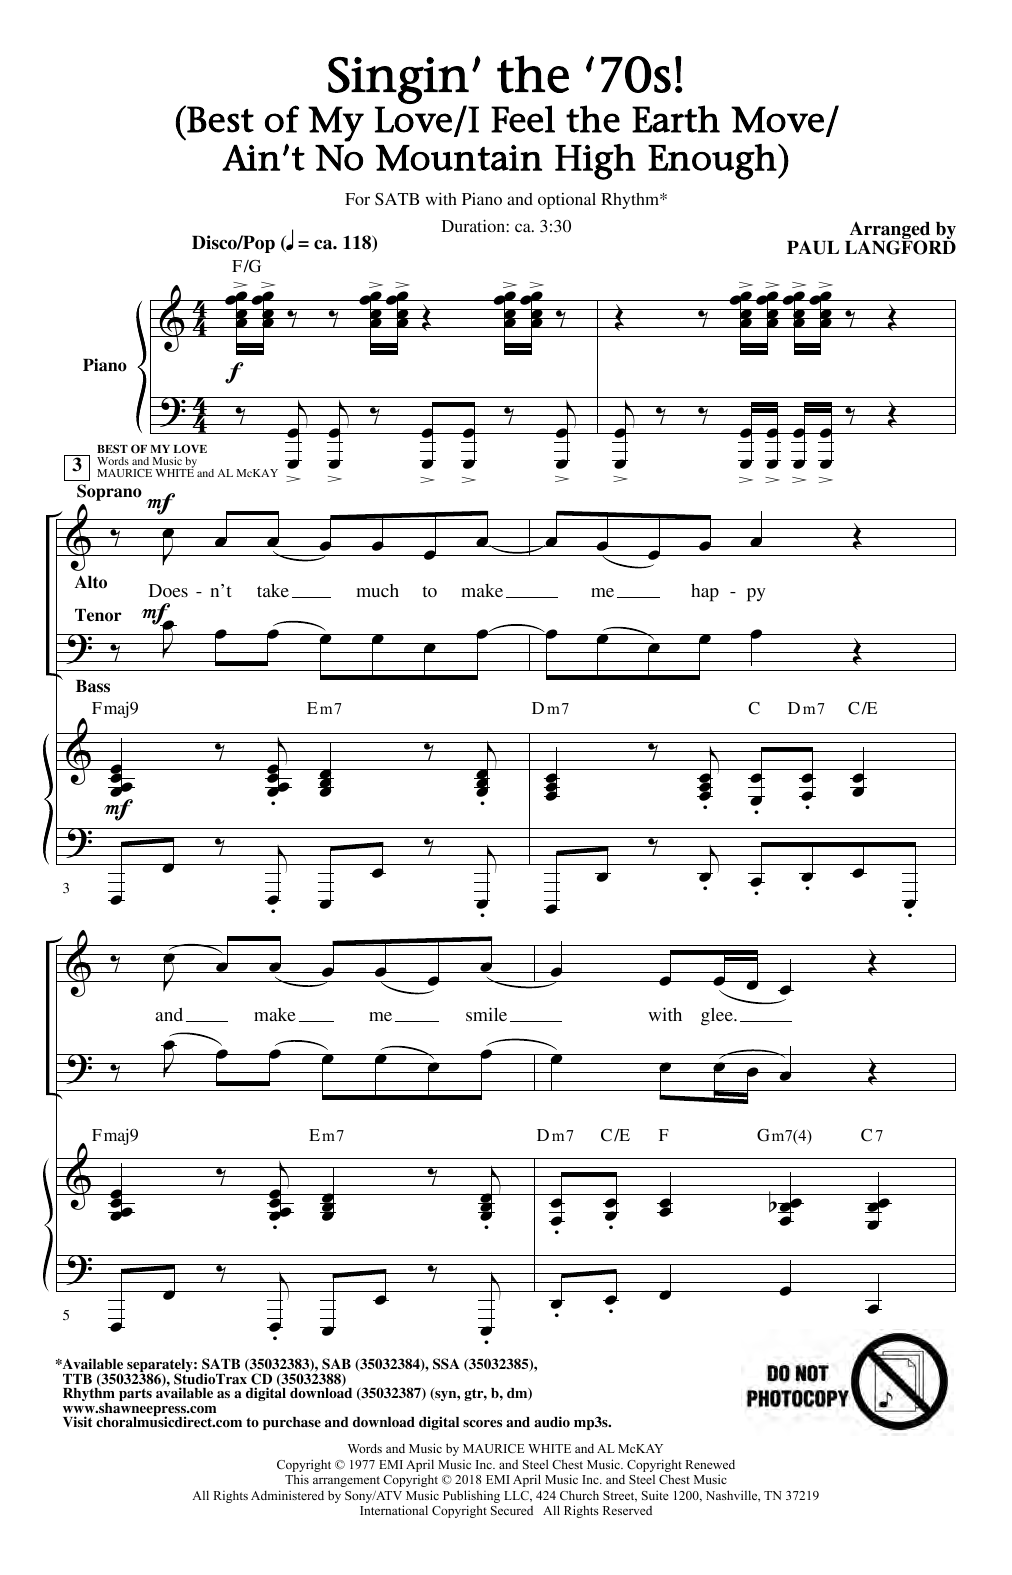 Paul Langford Singin' The 70's (arr. Paul Langford) Sheet Music Notes & Chords for SAB Choir - Download or Print PDF